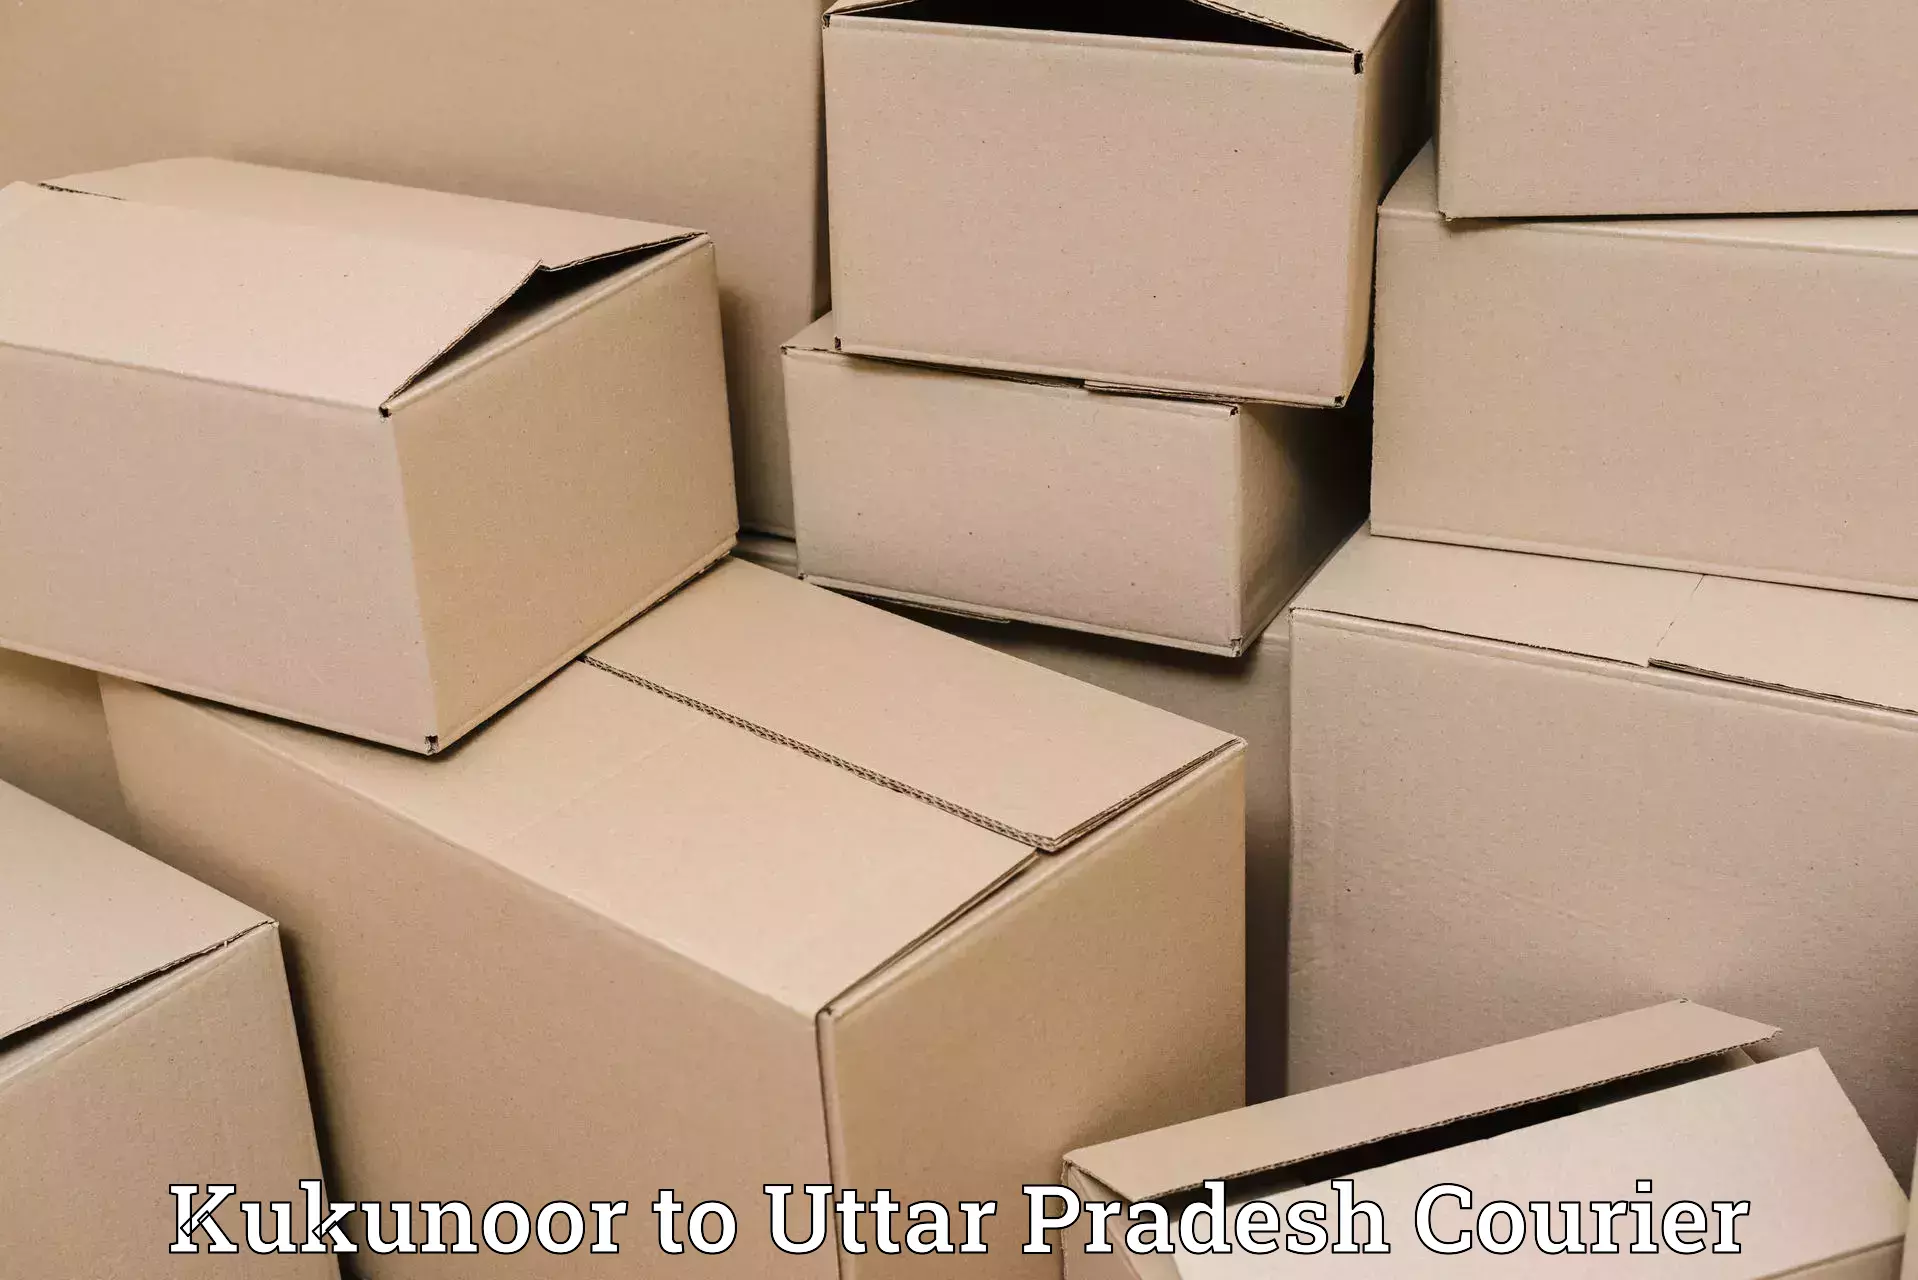 Global shipping solutions Kukunoor to Aligarh Muslim University